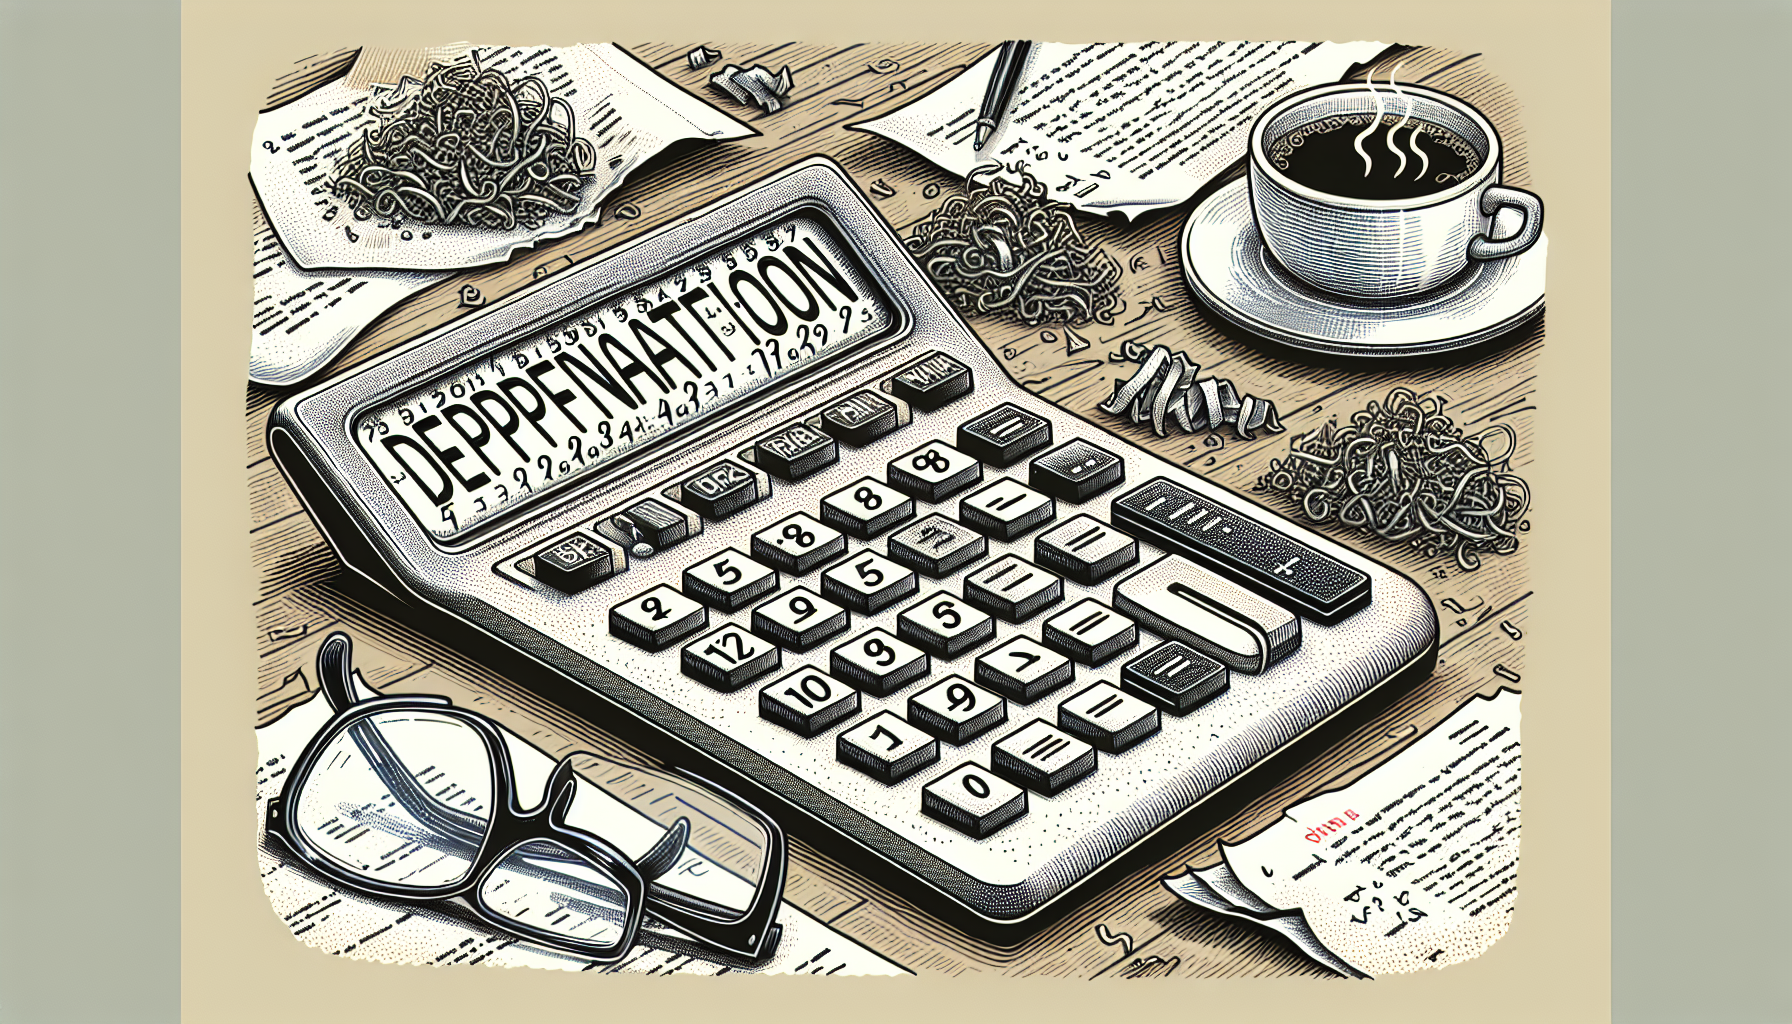 Illustration of a depreciation calculator